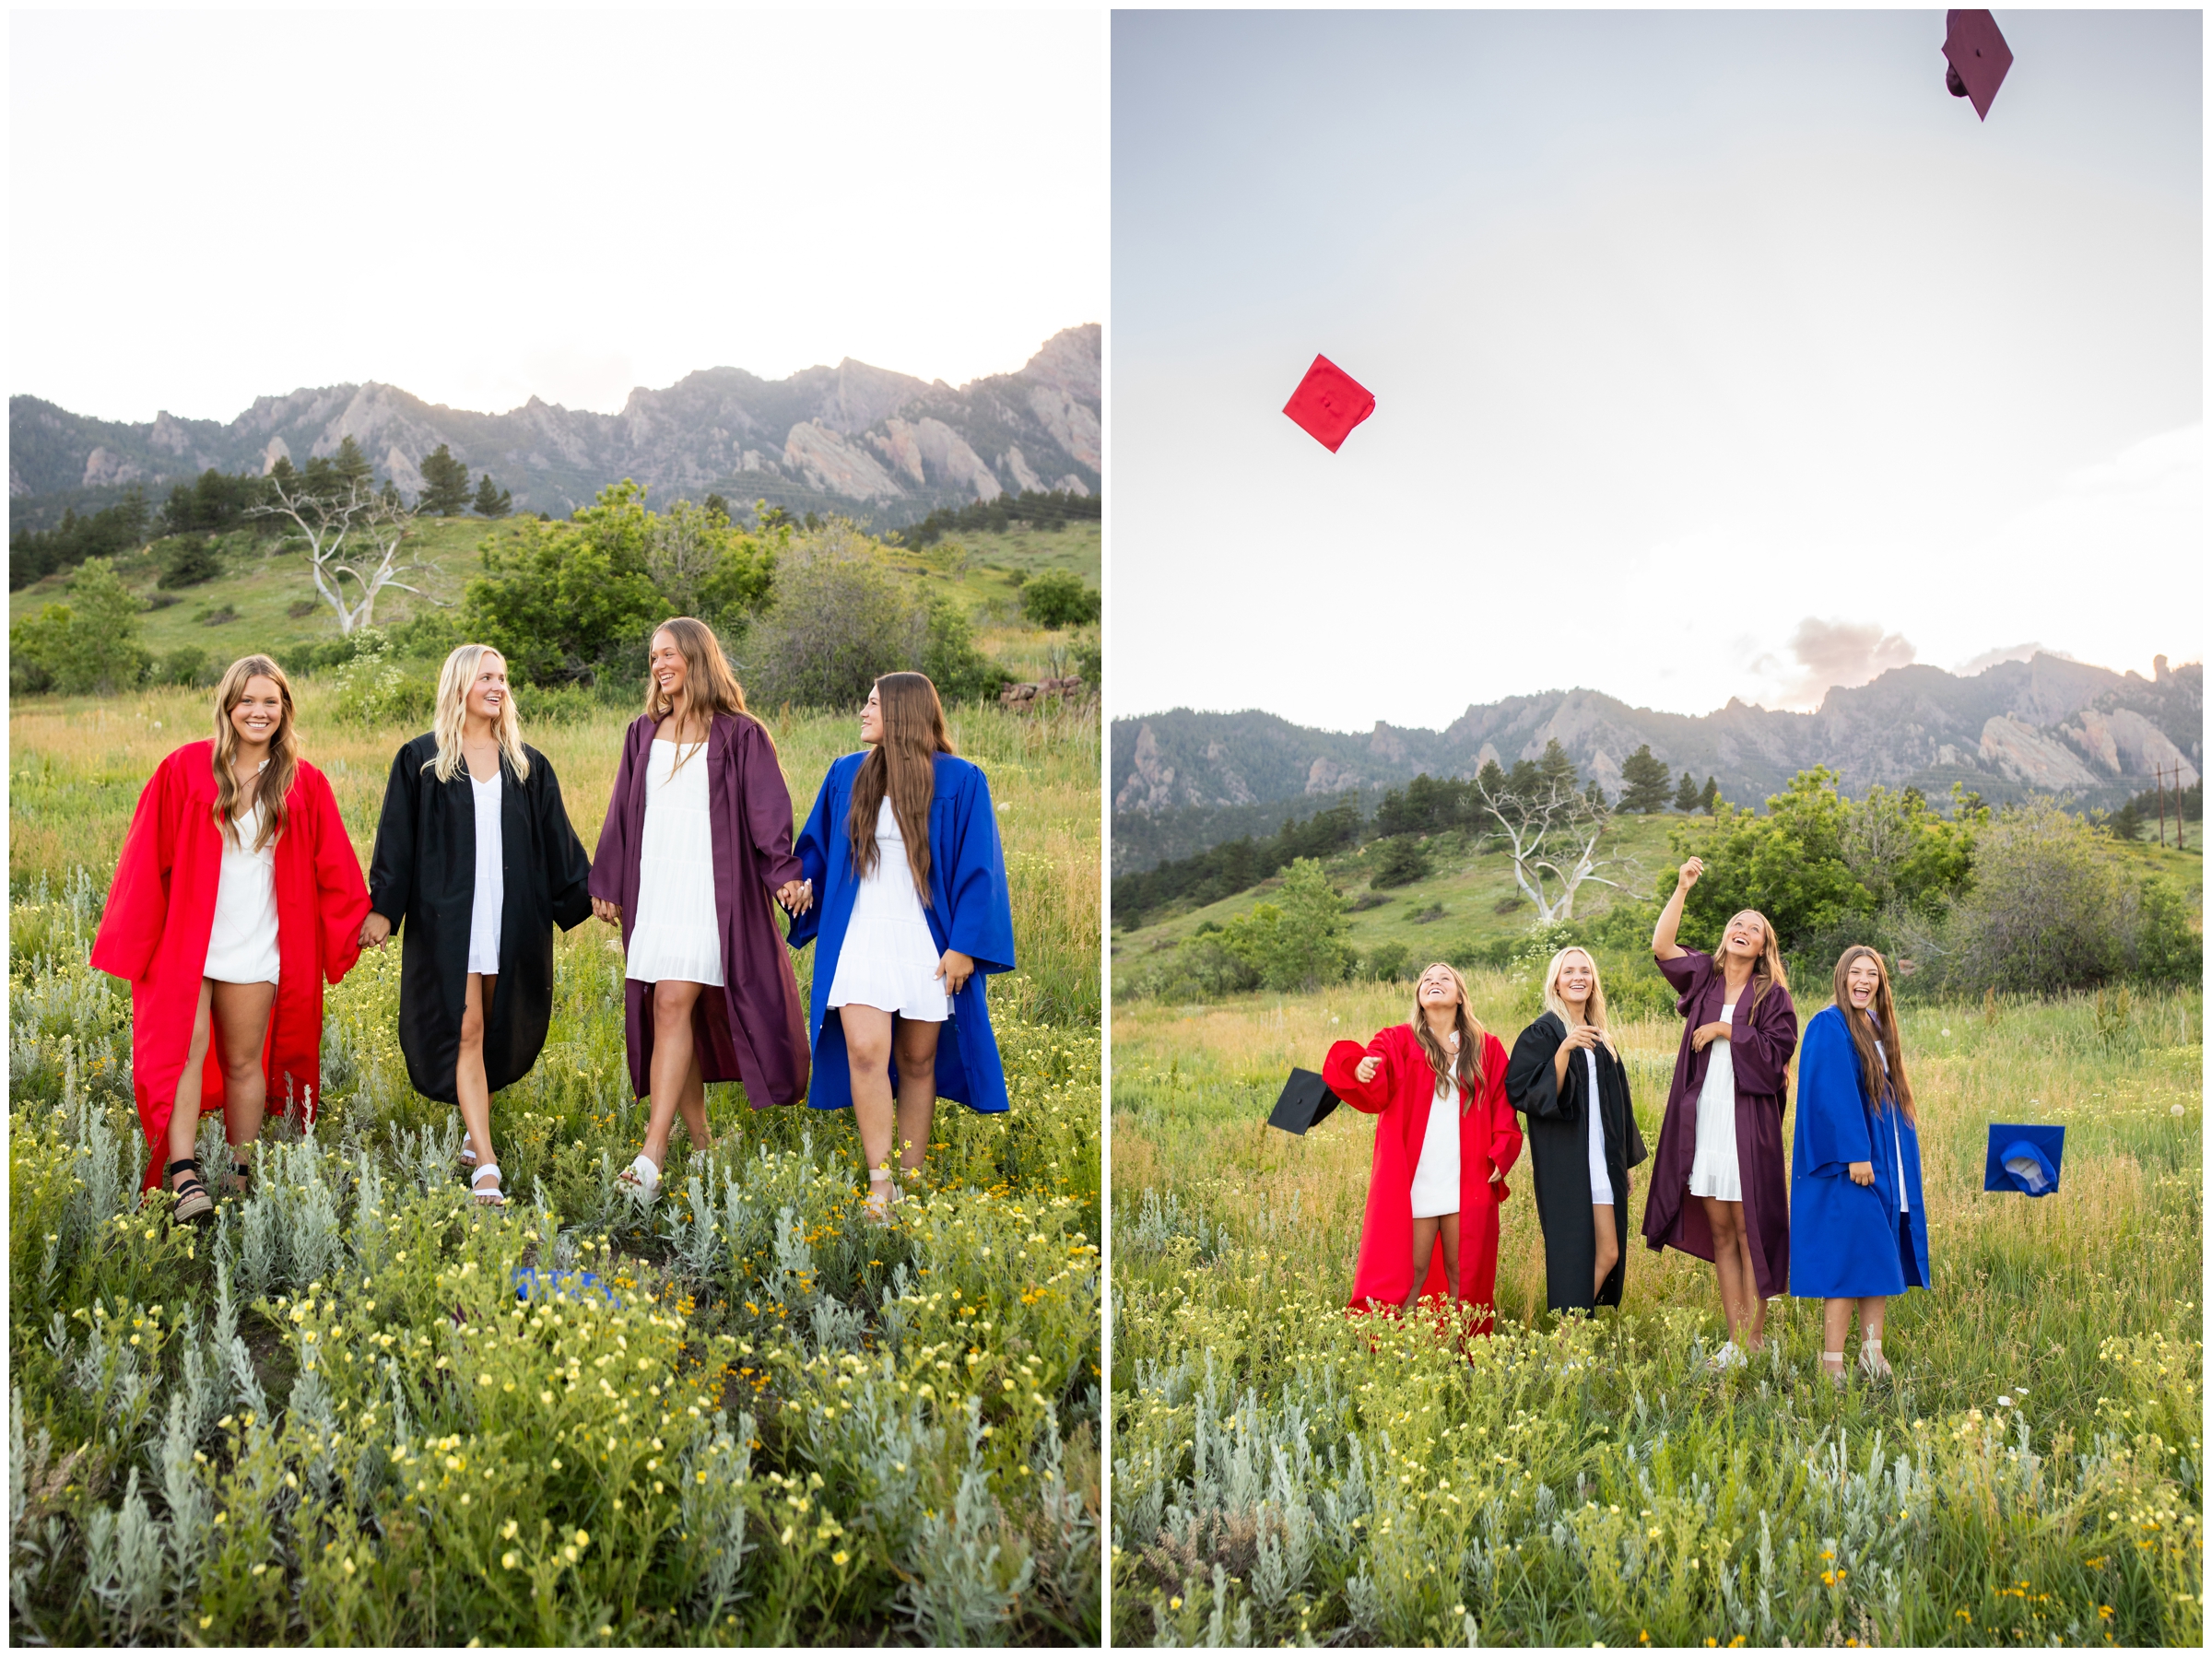 Boulder cap and gown graduation photos at South Mesa Trail by Colorado senior photographer Plum Pretty Photography